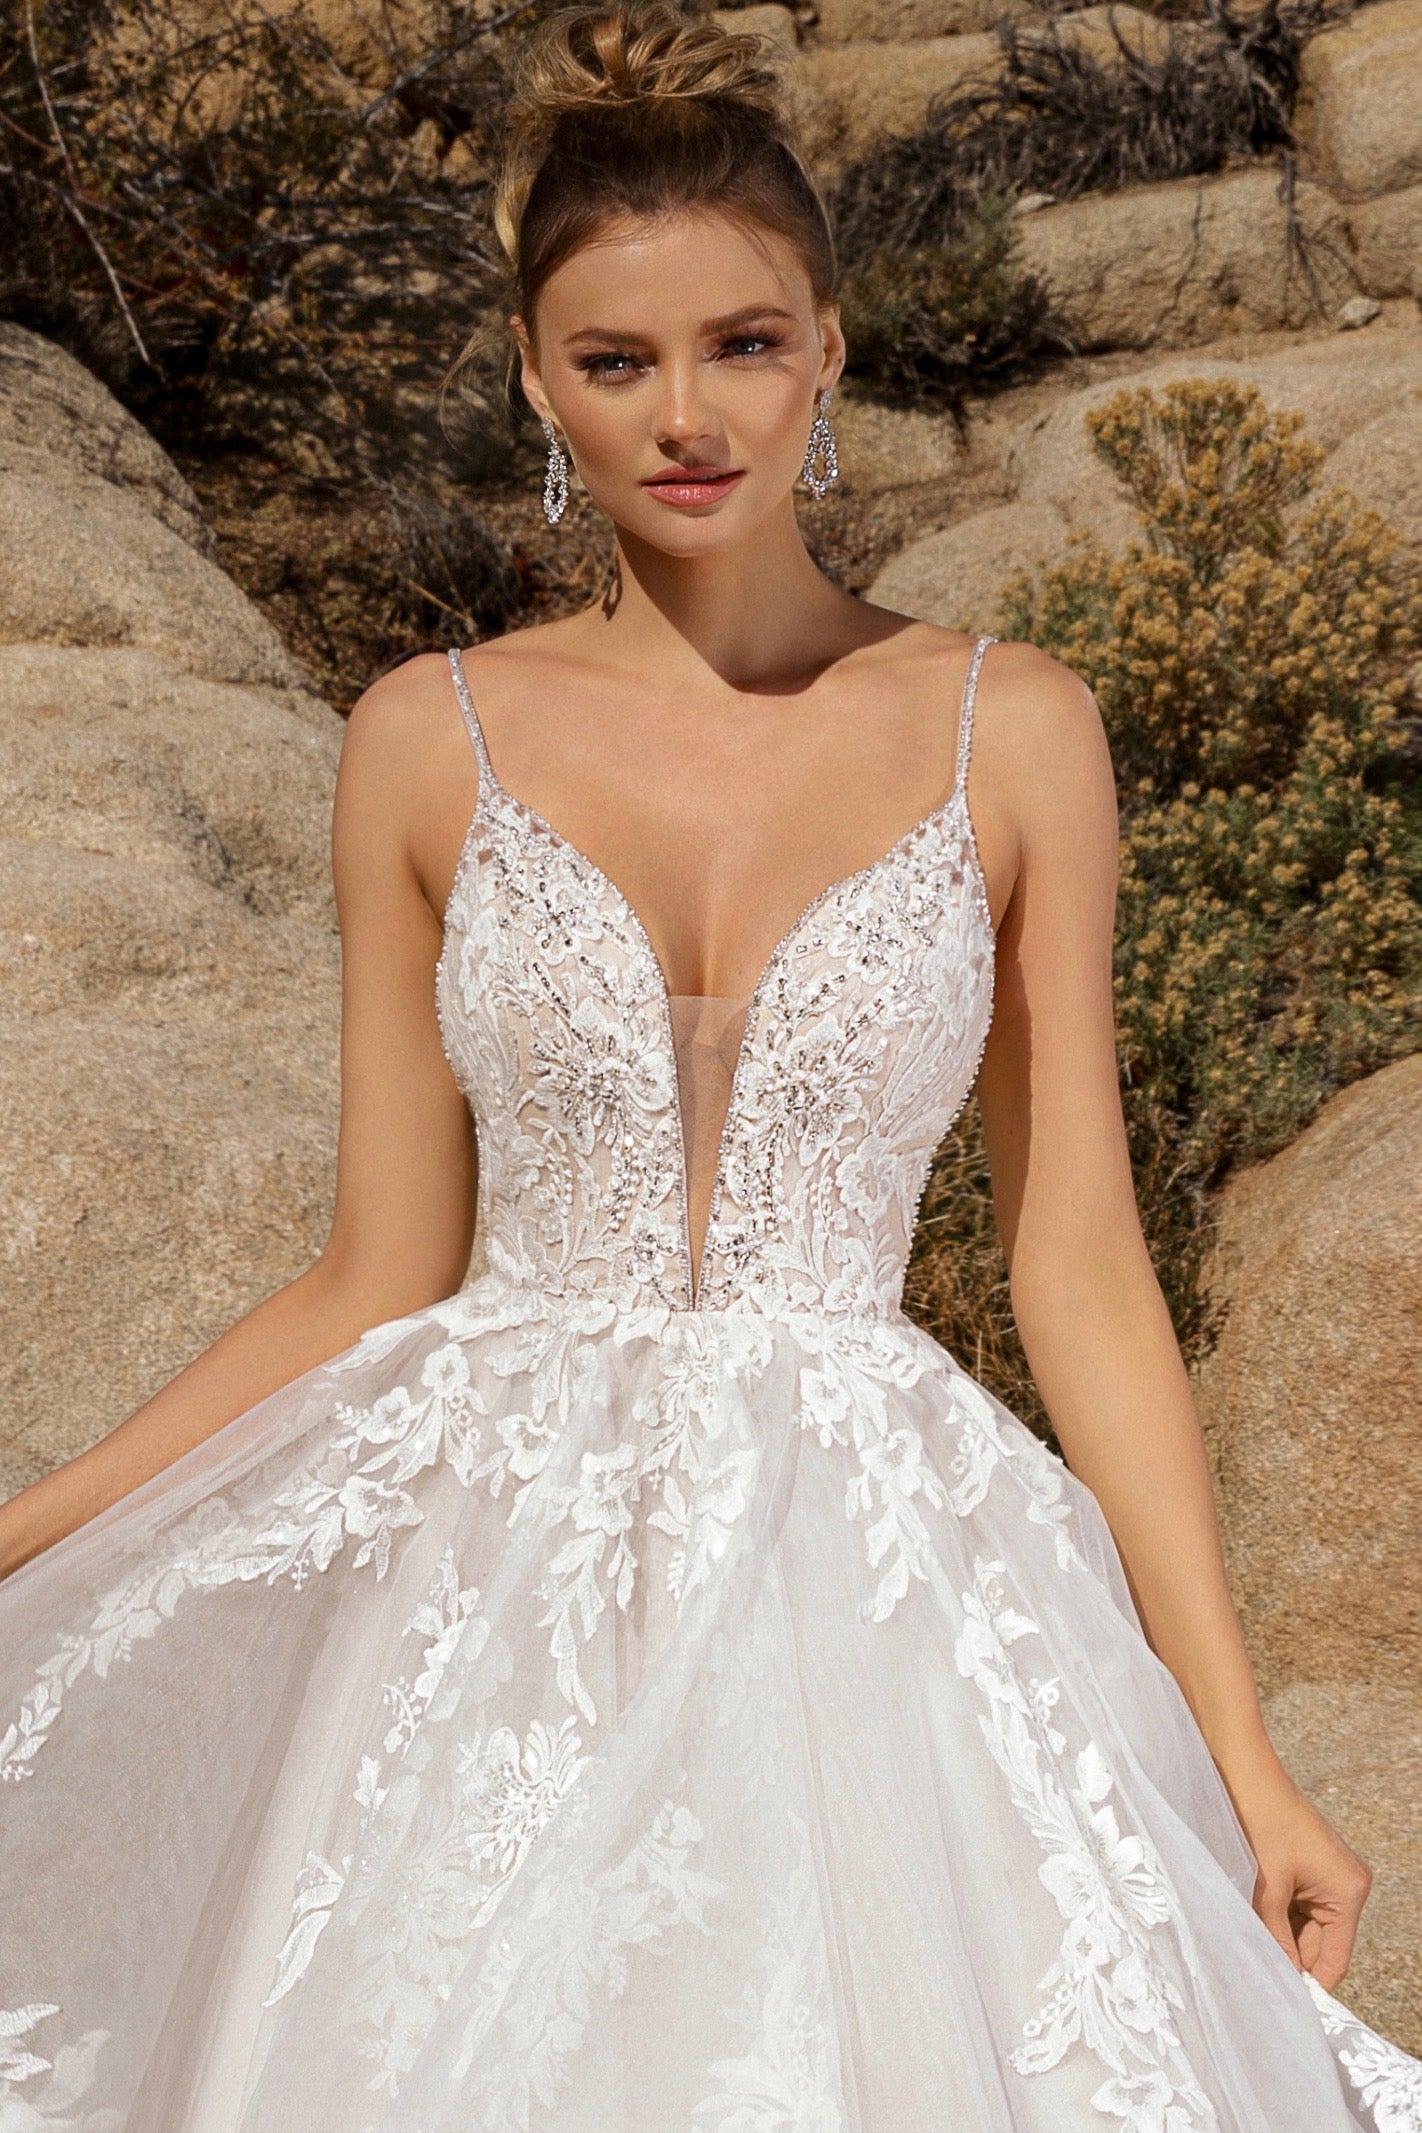 Sweetheart Neckline Wedding Dress Jewelry - Shop on Pinterest